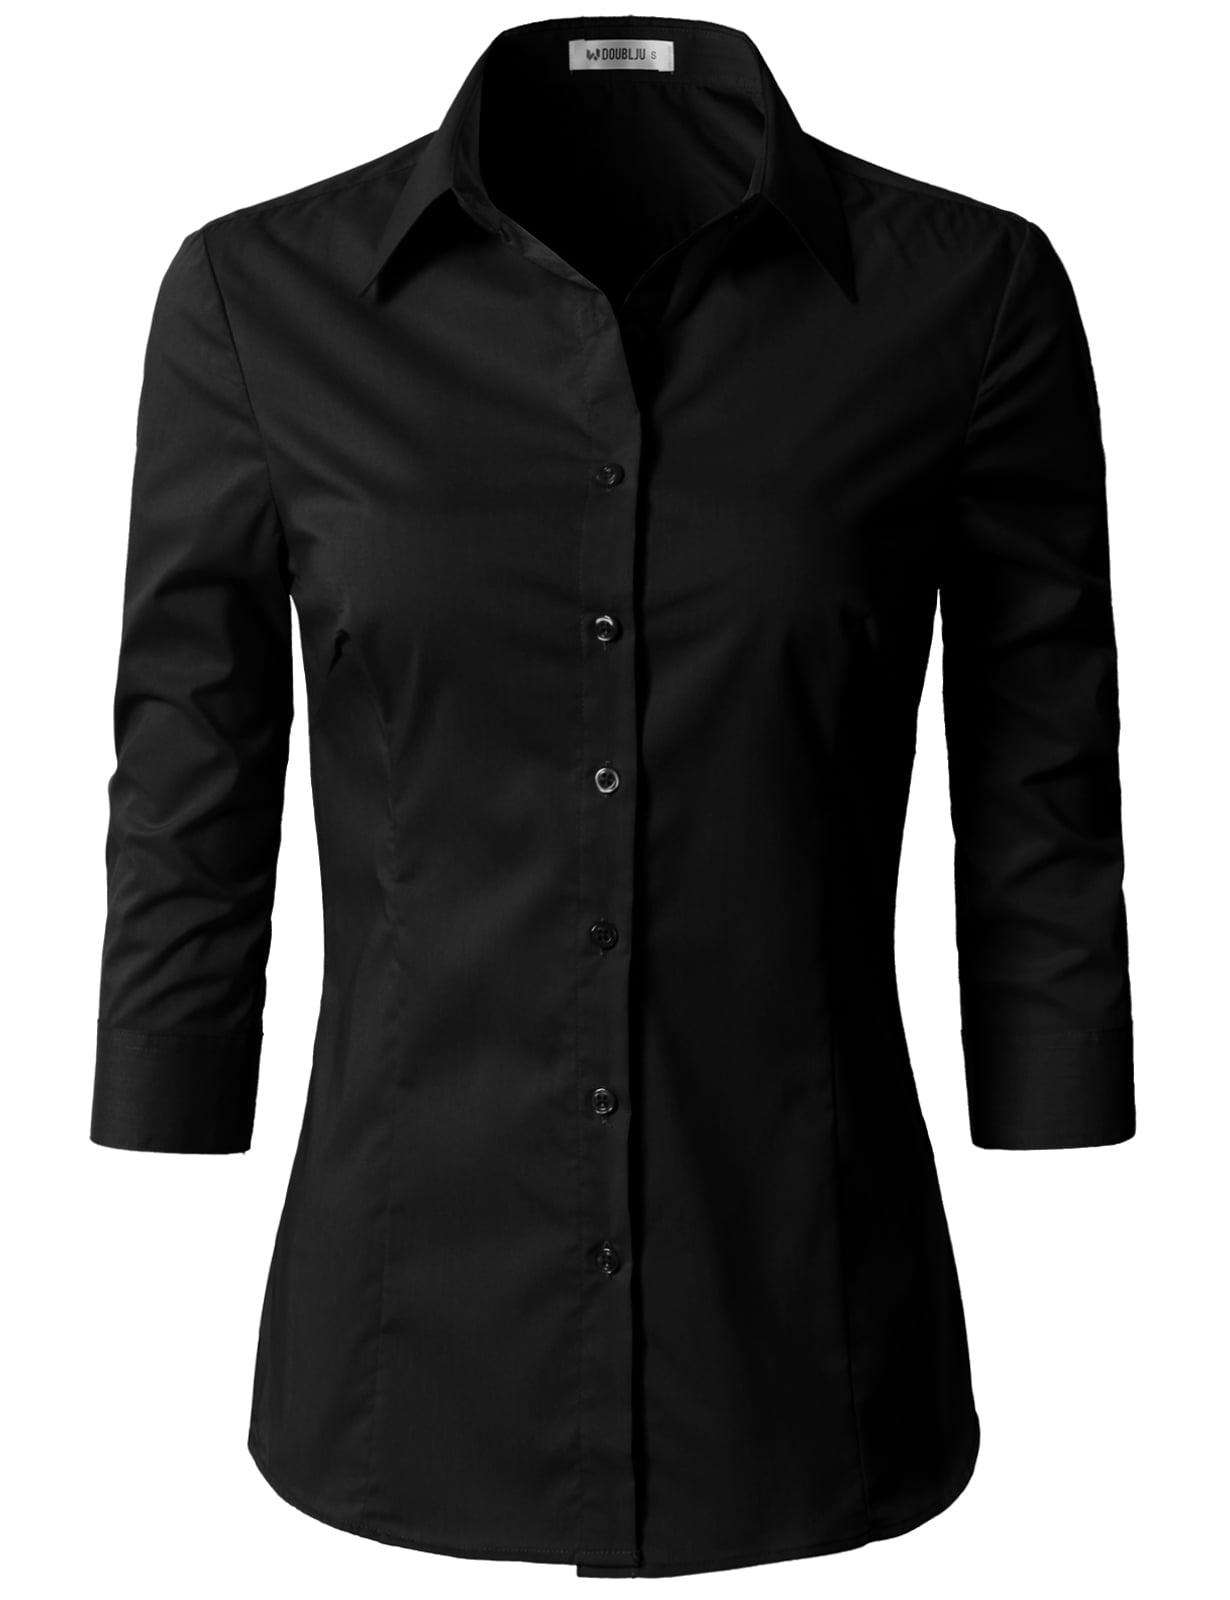 Doublju Women's 3/4 Sleeve Slim Fit Button Down Dress Shirt (Plus Size ...